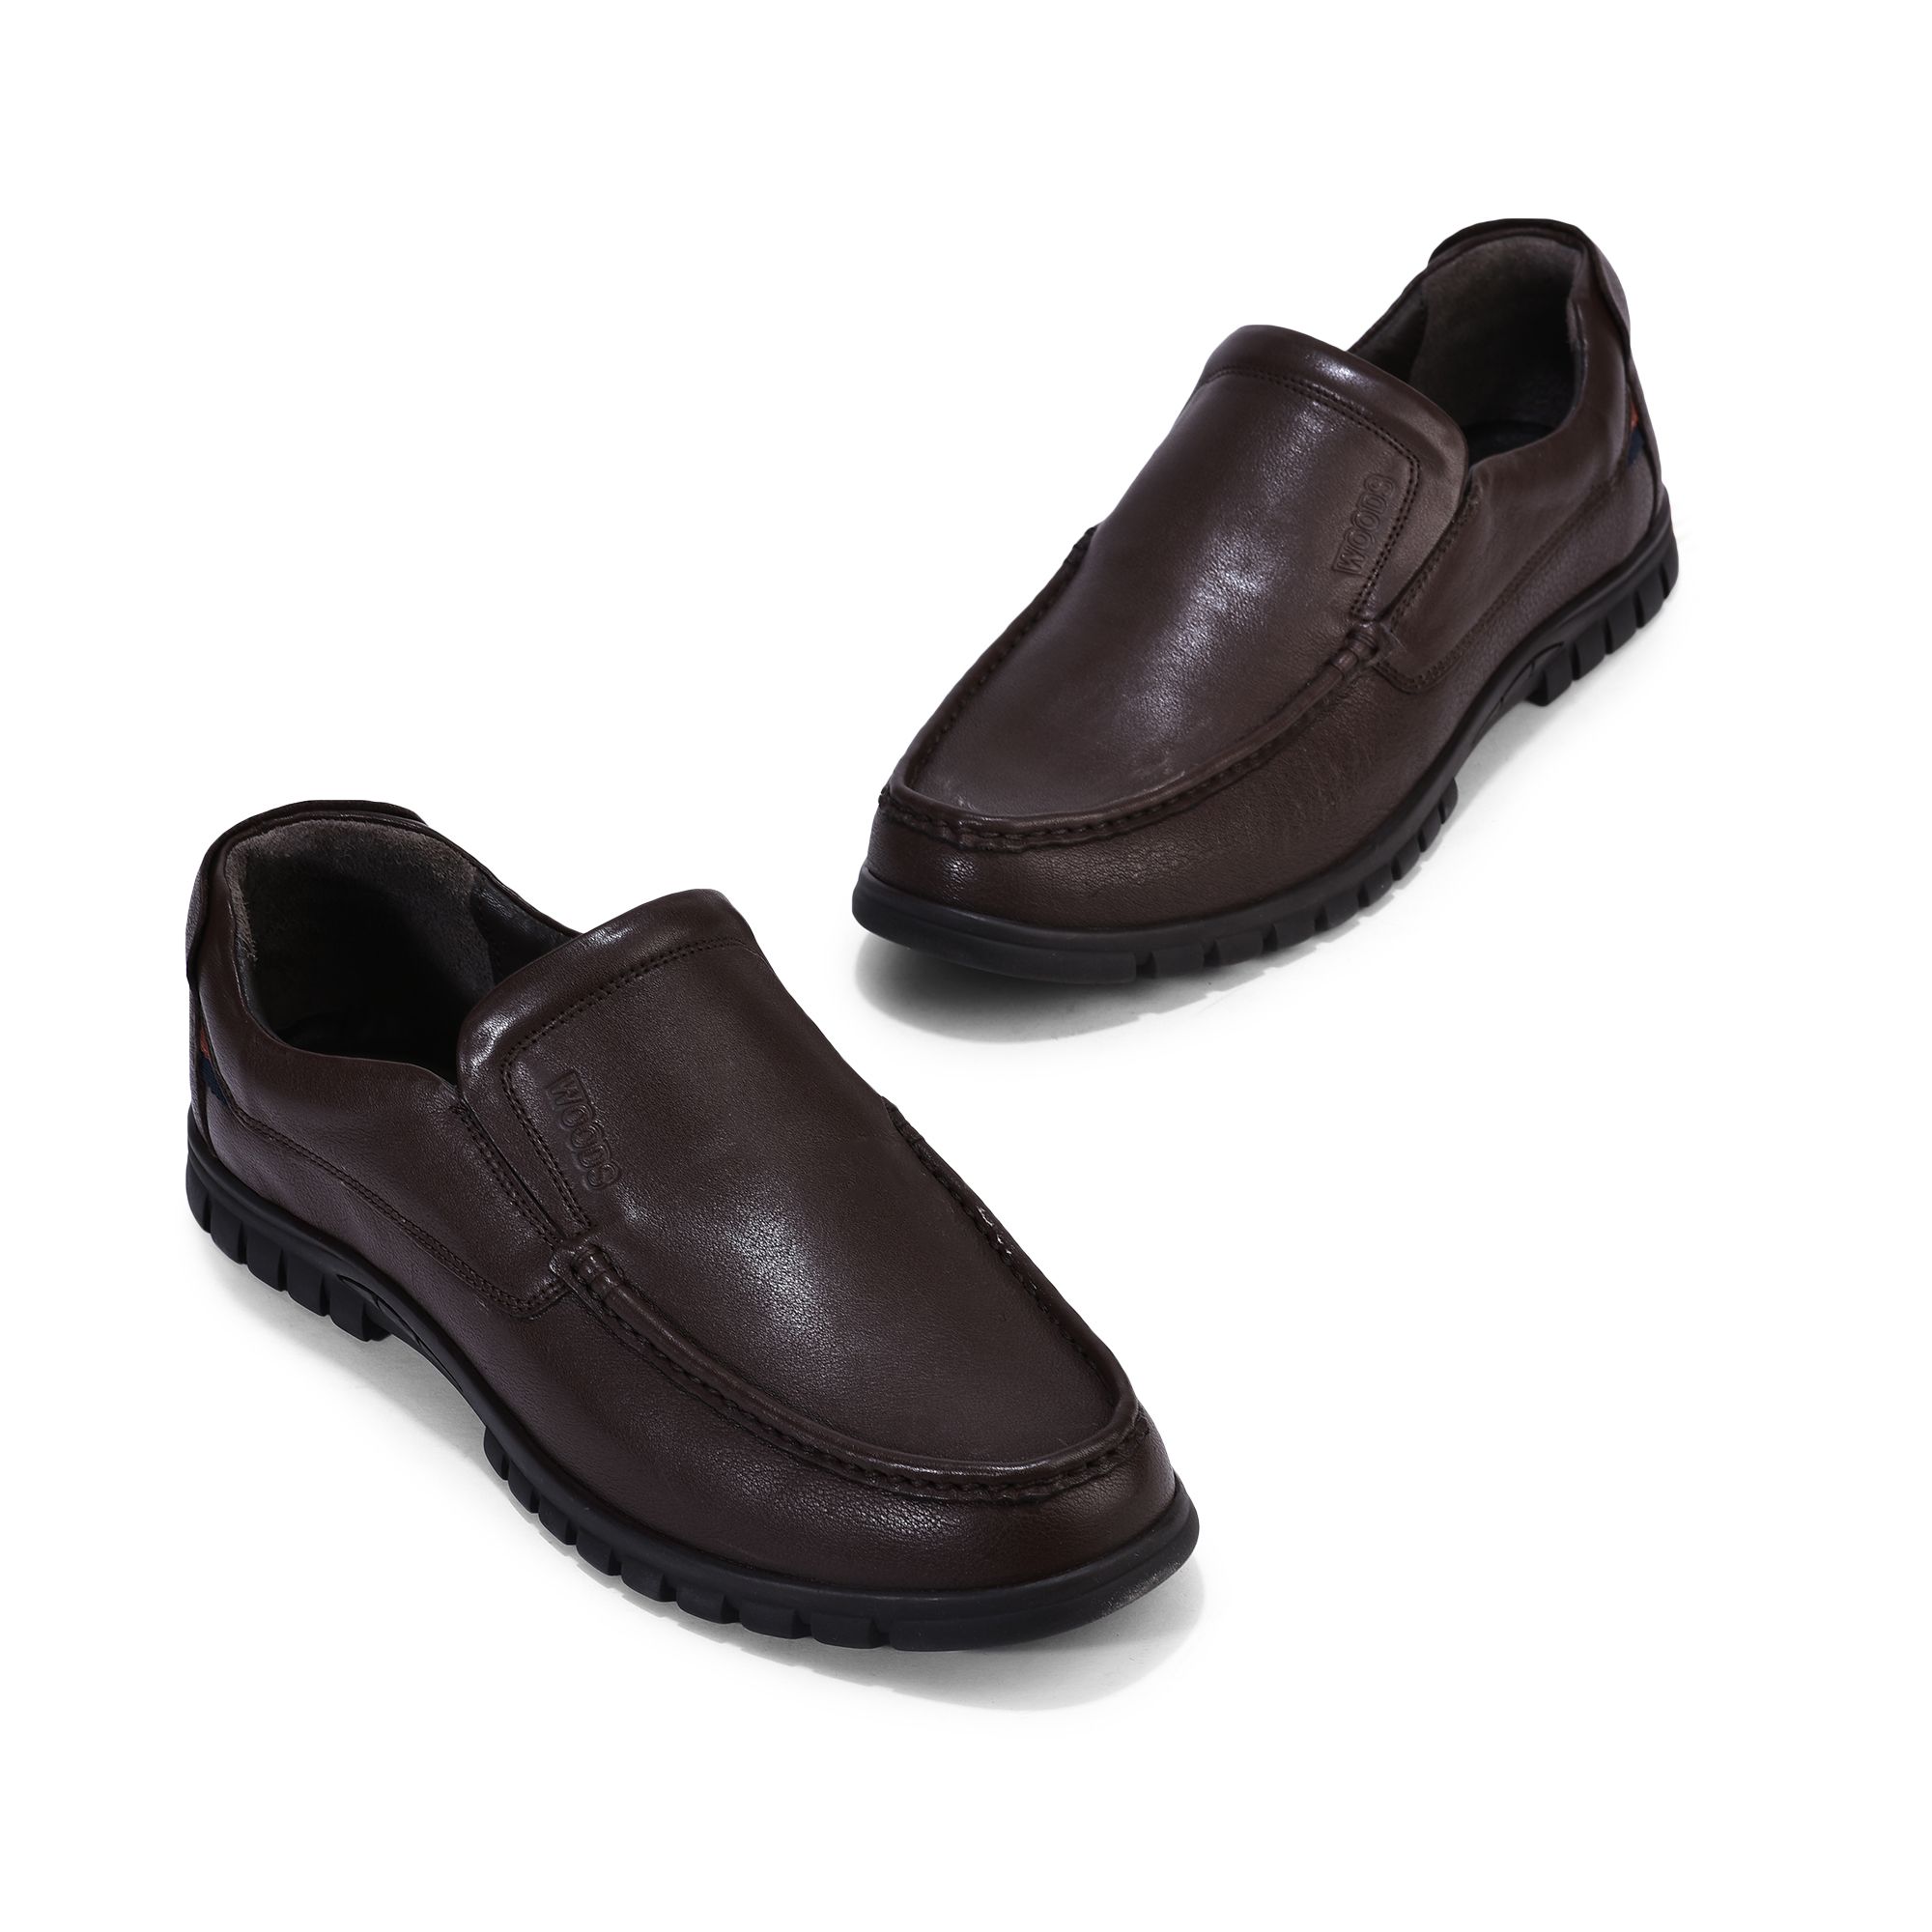 Brown slip-on formal shoe